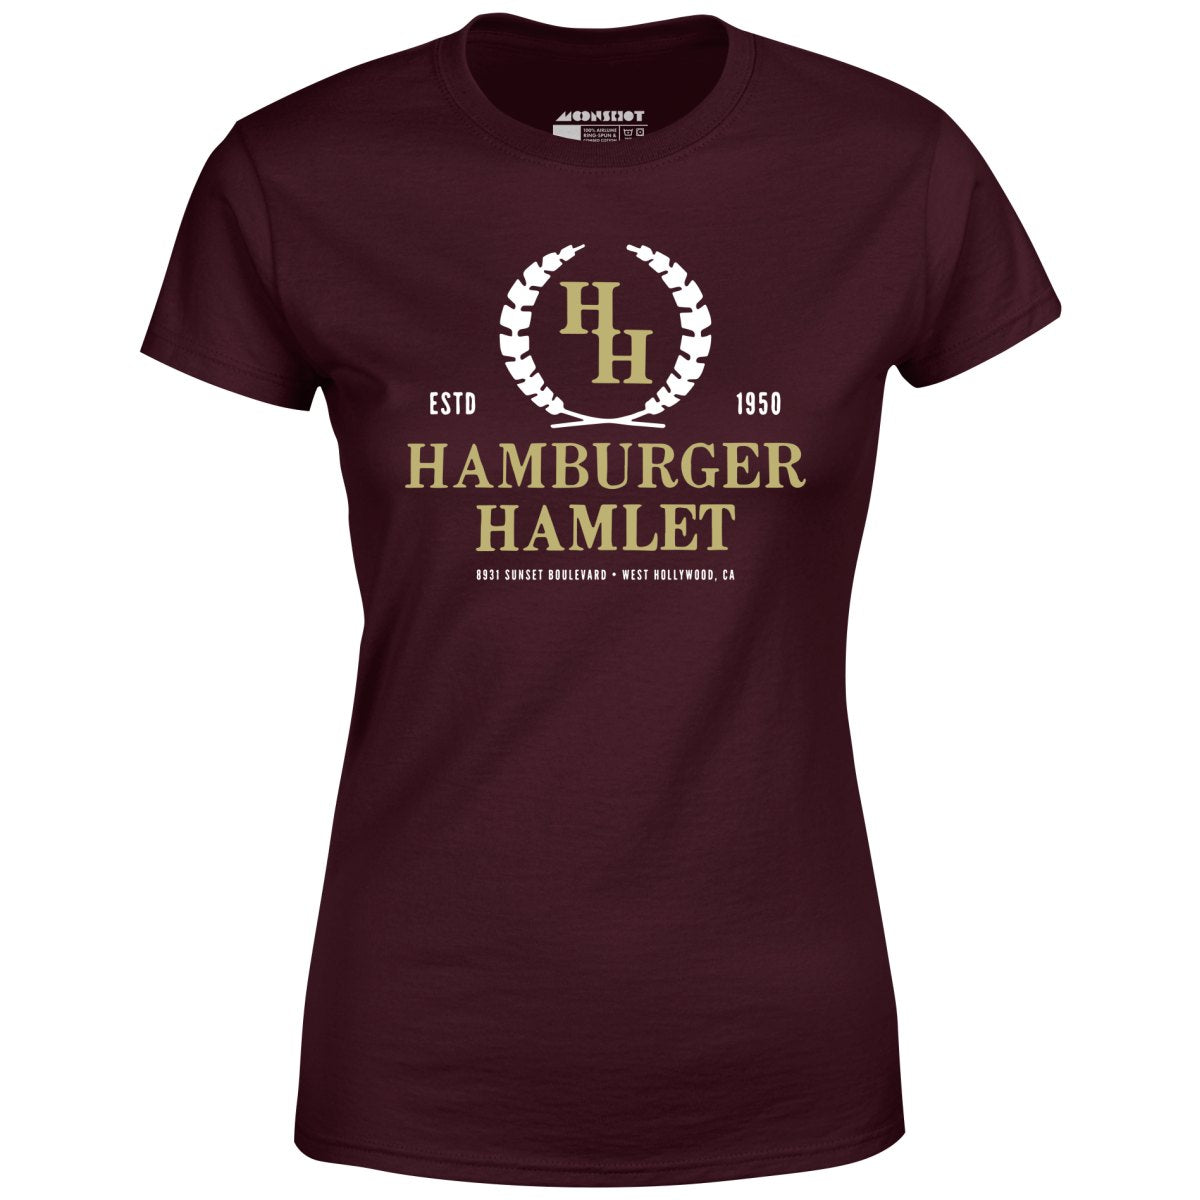 Hamburger Hamlet - West Hollywood, CA - Vintage Restaurant - Women's T-Shirt